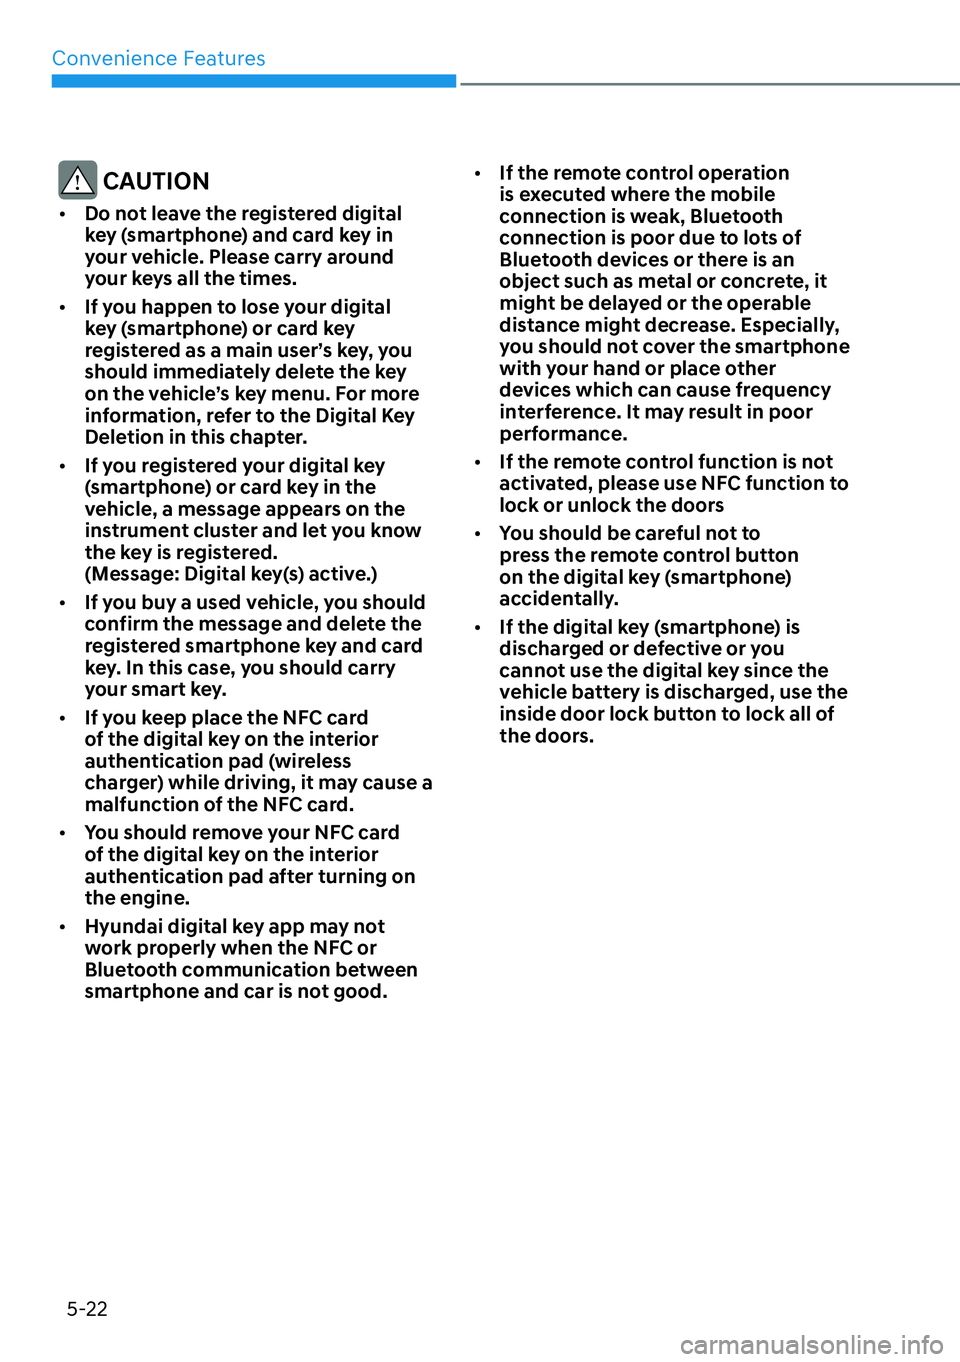 HYUNDAI IONIQ 5 2022  Owners Manual Convenience Features
5-22
 CAUTION
[�Do not leave the registered digital 
key (smartphone) and card key in 
your vehicle. Please carry around 
your keys all the times.
[�If you happen to lose your